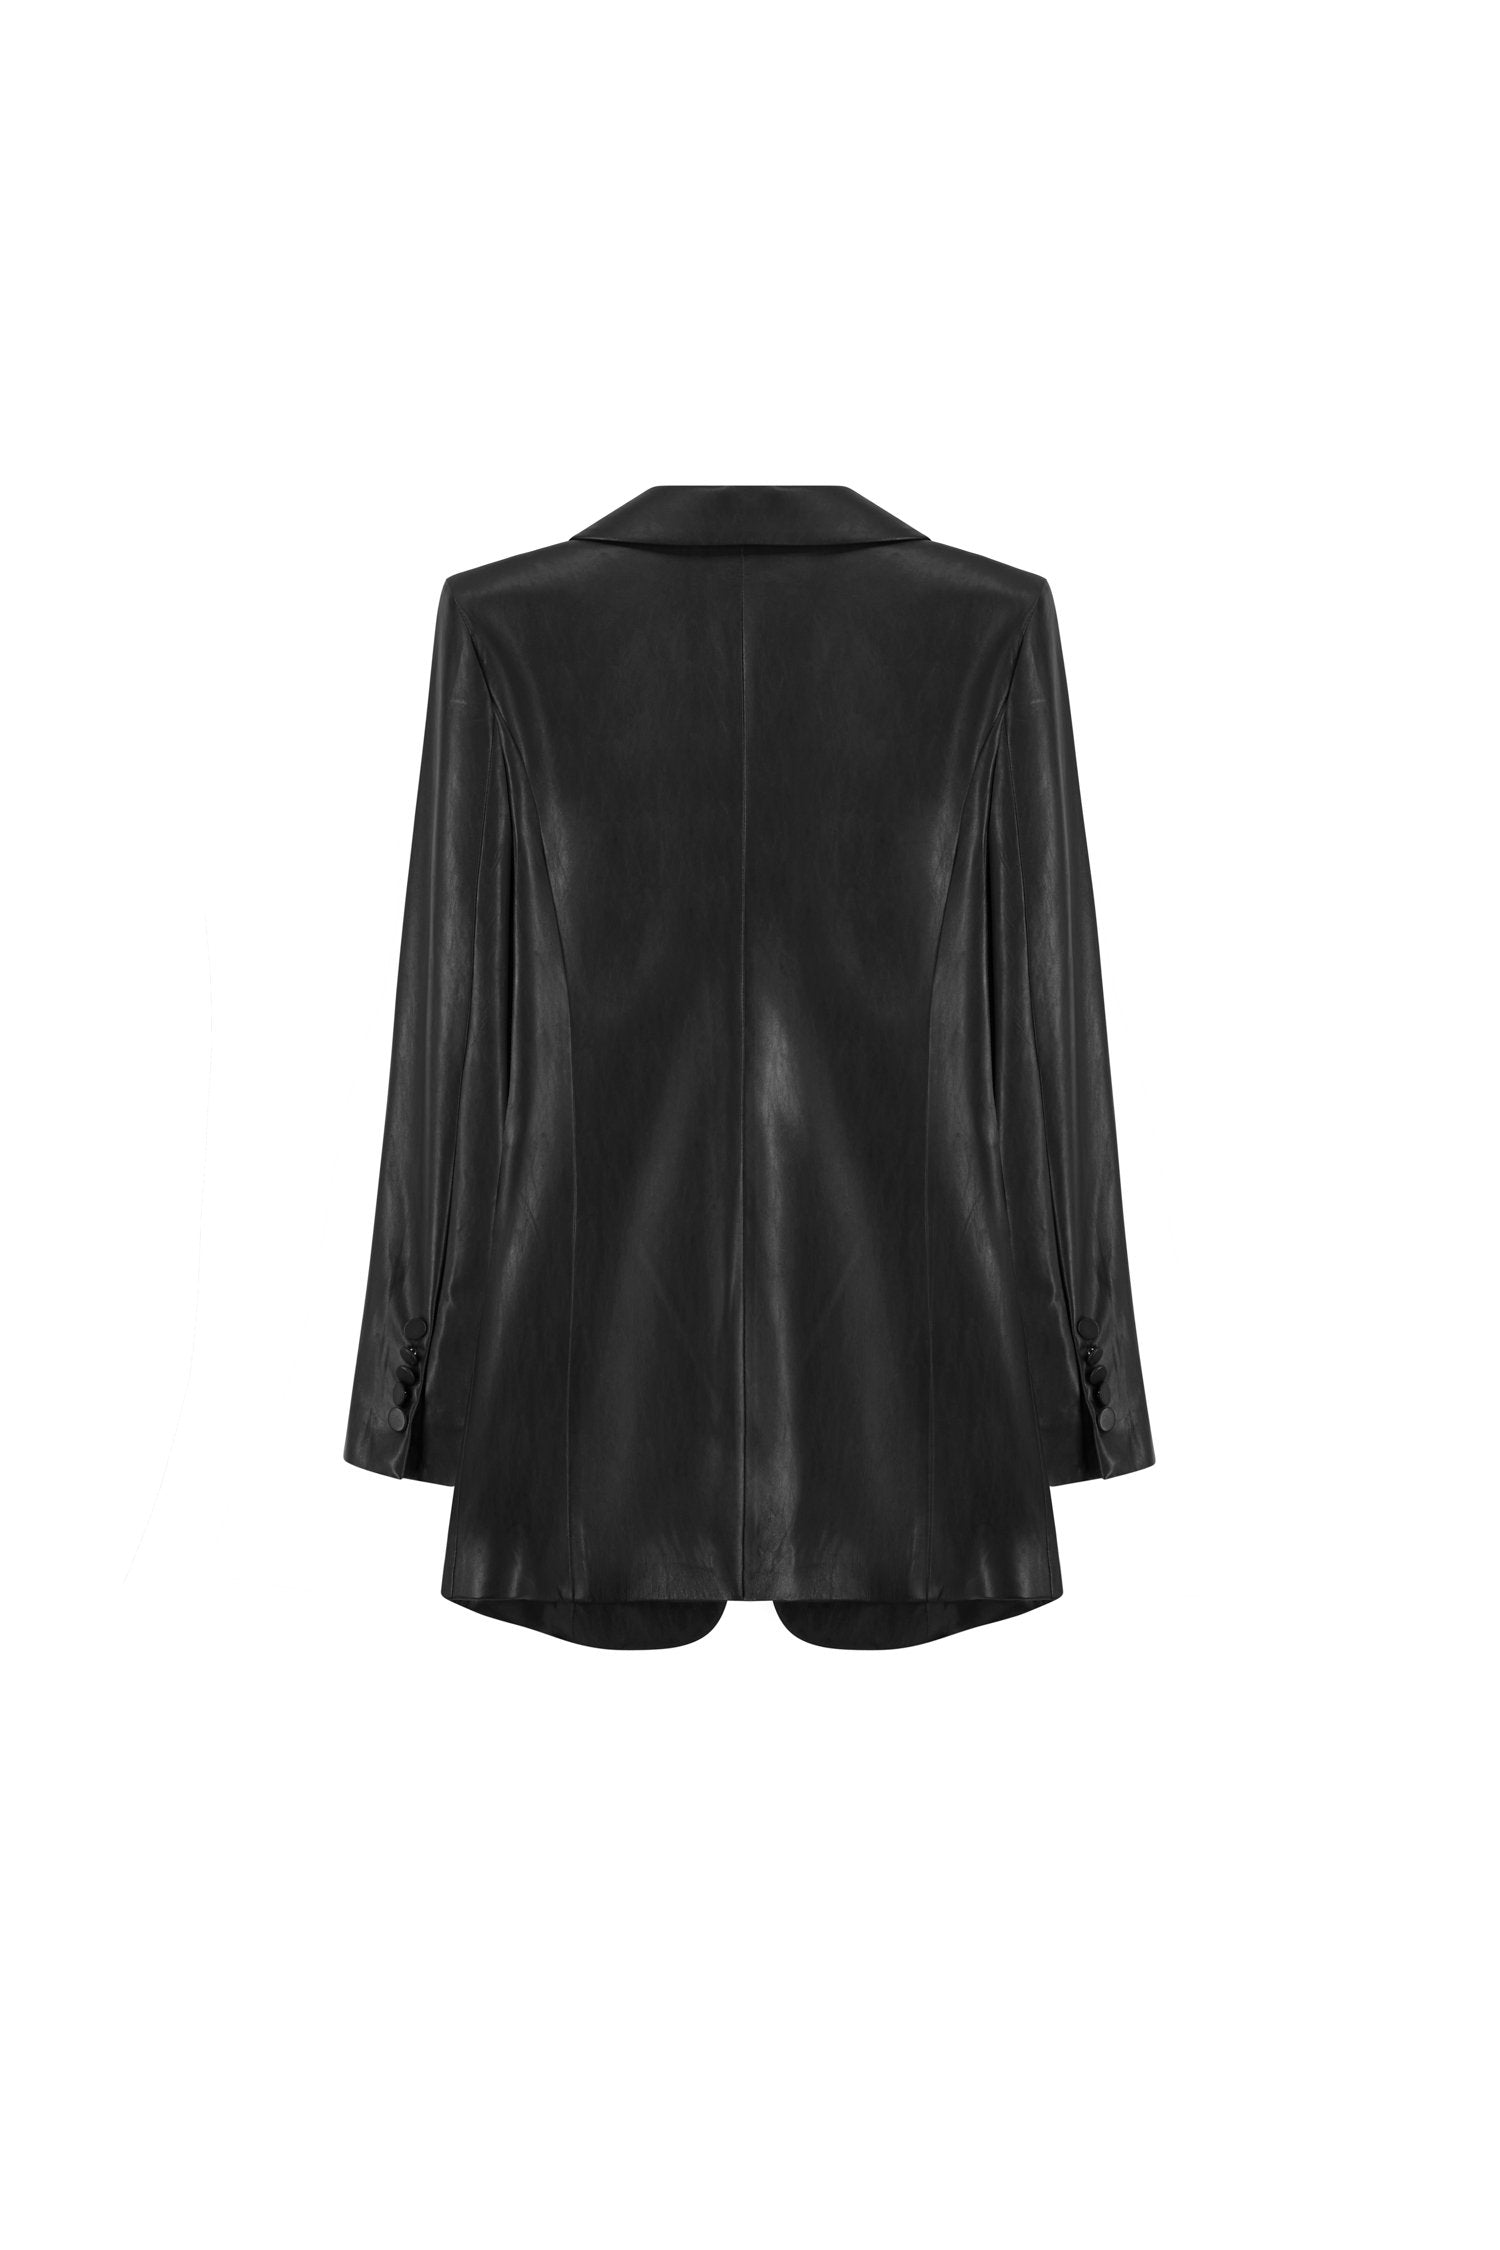 Faux leather black blazer